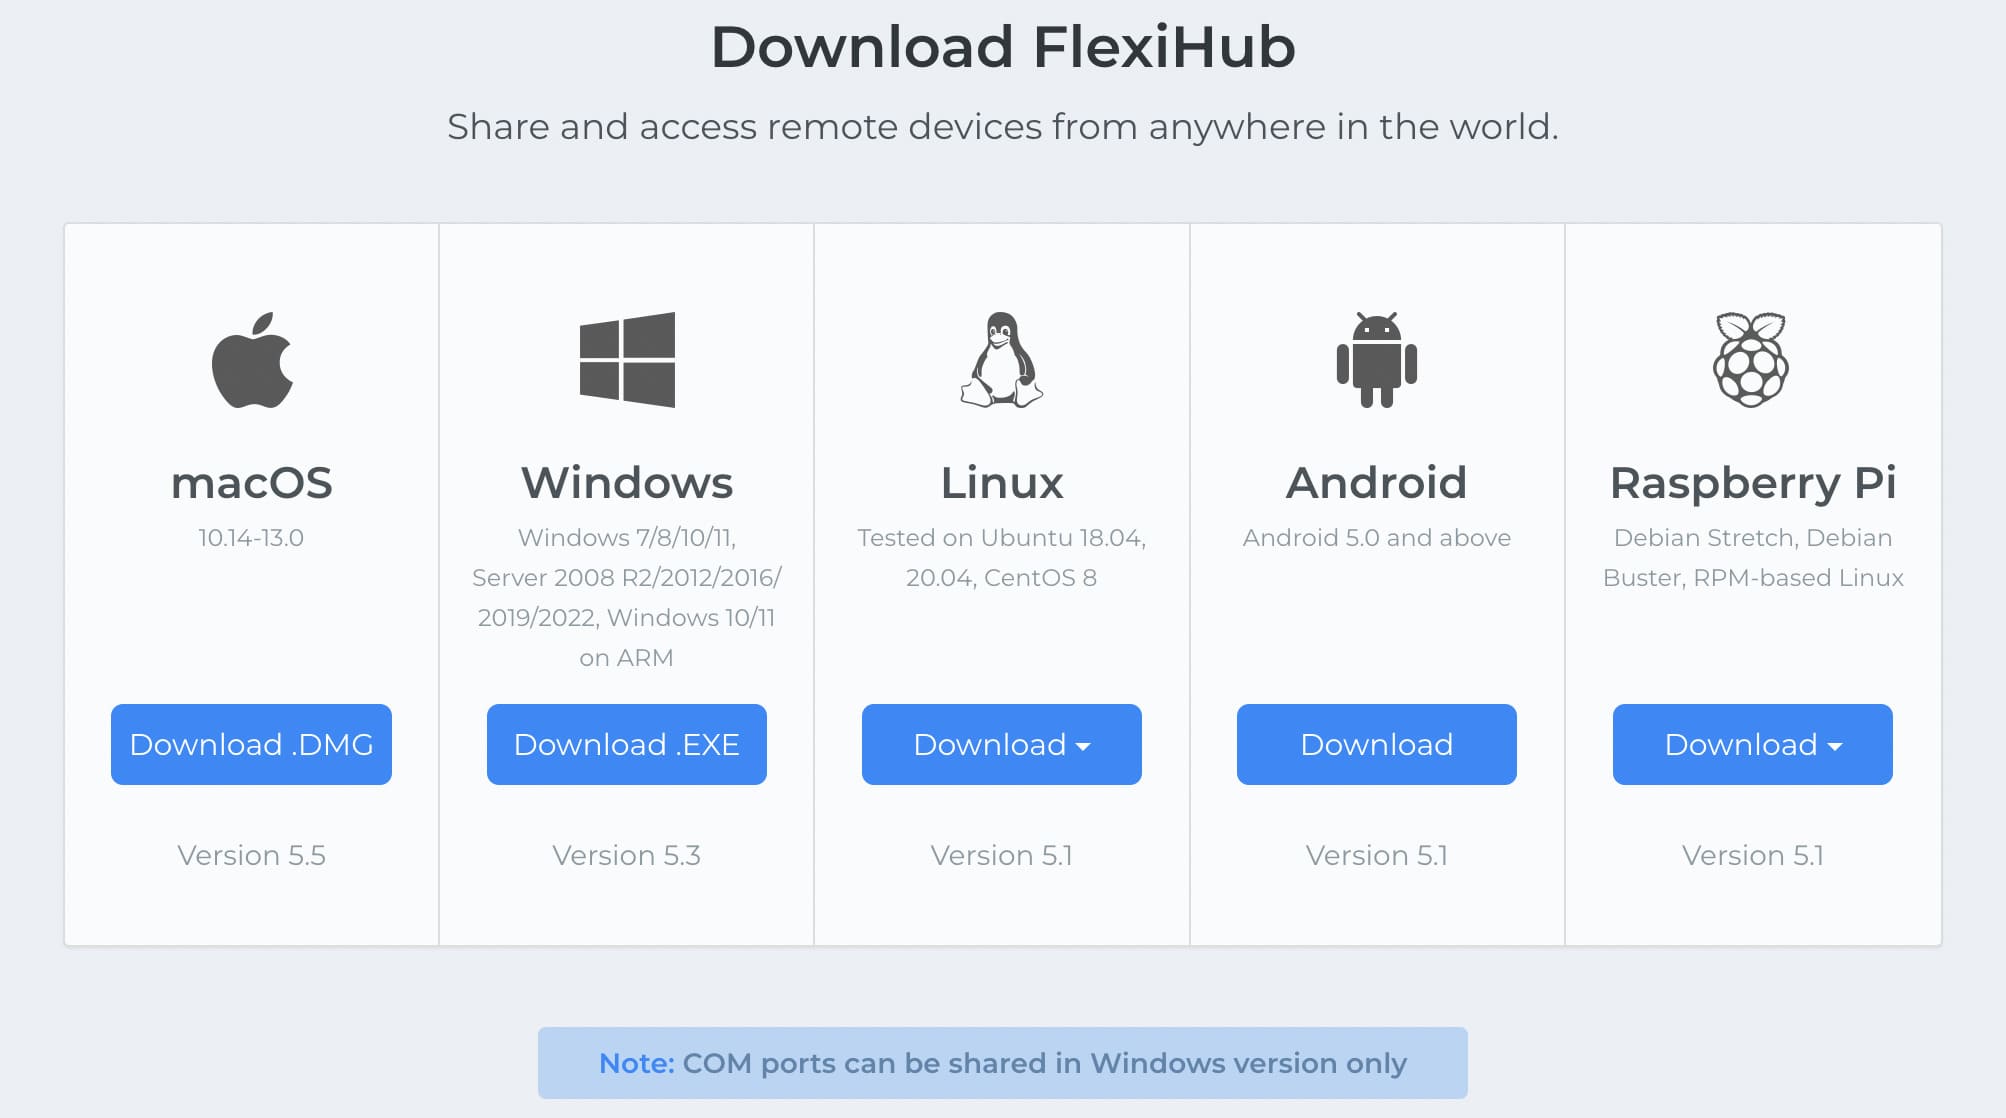  download compatible flexihub version